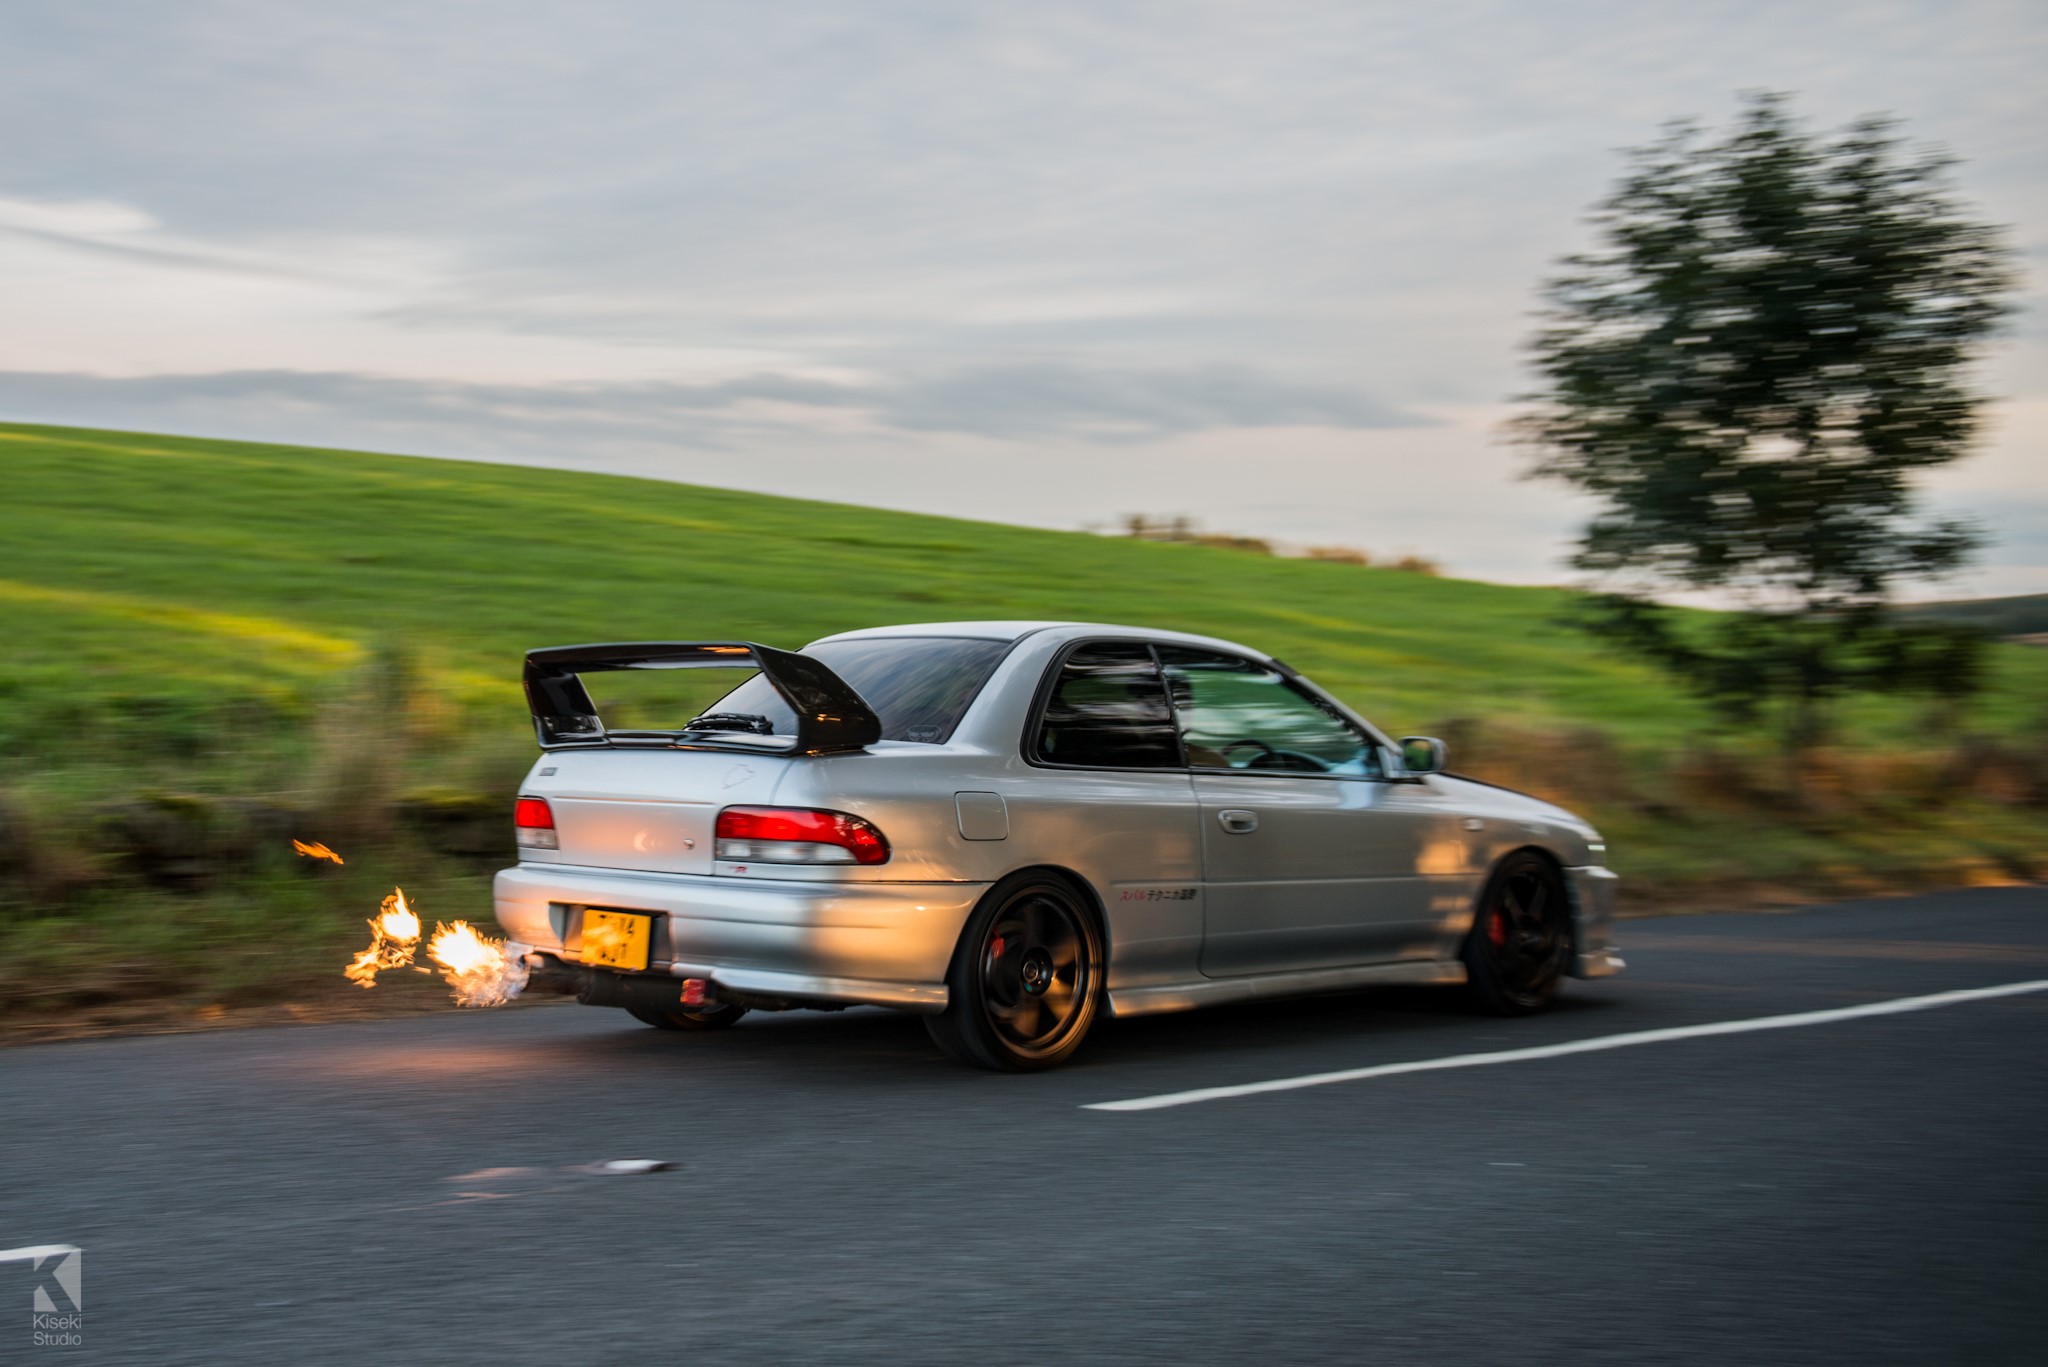 Subaru Impreza STI GC8 flames